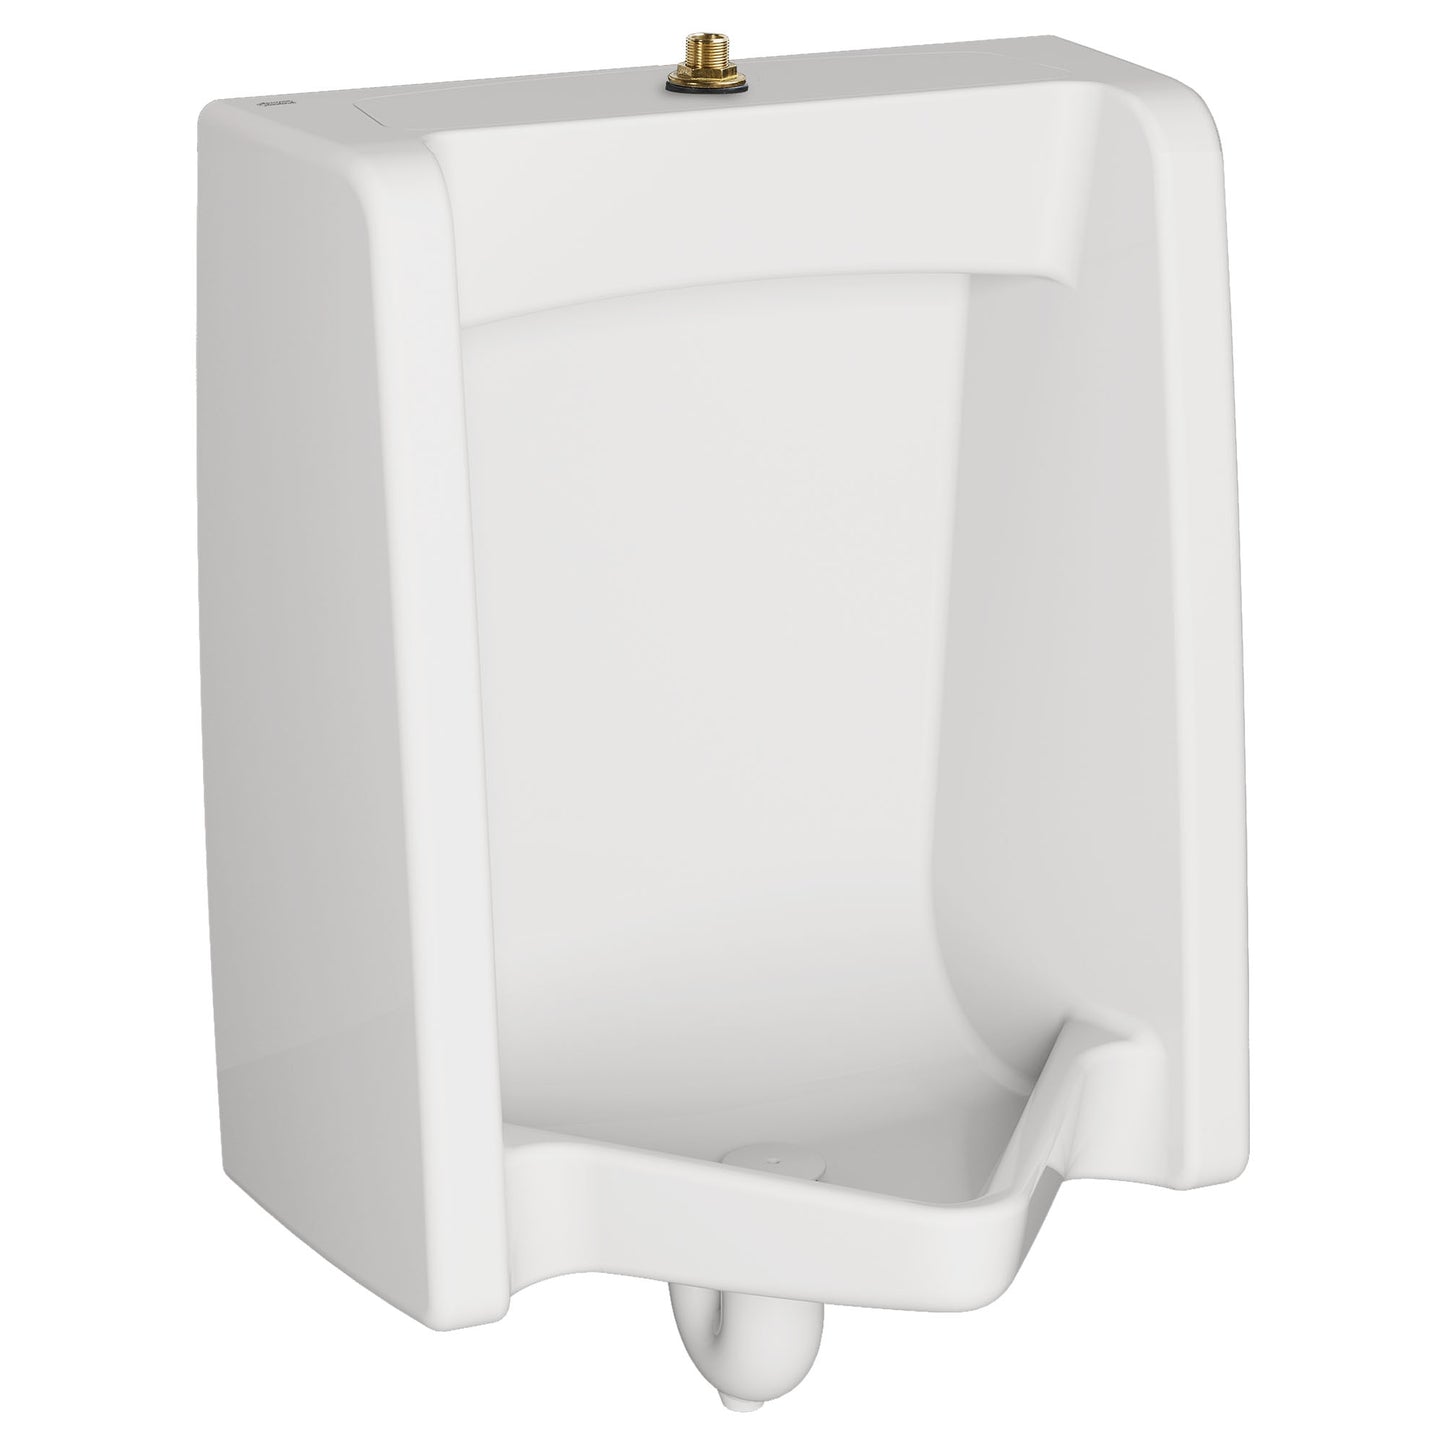 AMERICAN-STANDARD 6590001.020, Washbrook 0.125 – 1.0 gpf (0.47 – 3.8 Lpf) Top Spud Urinal in White